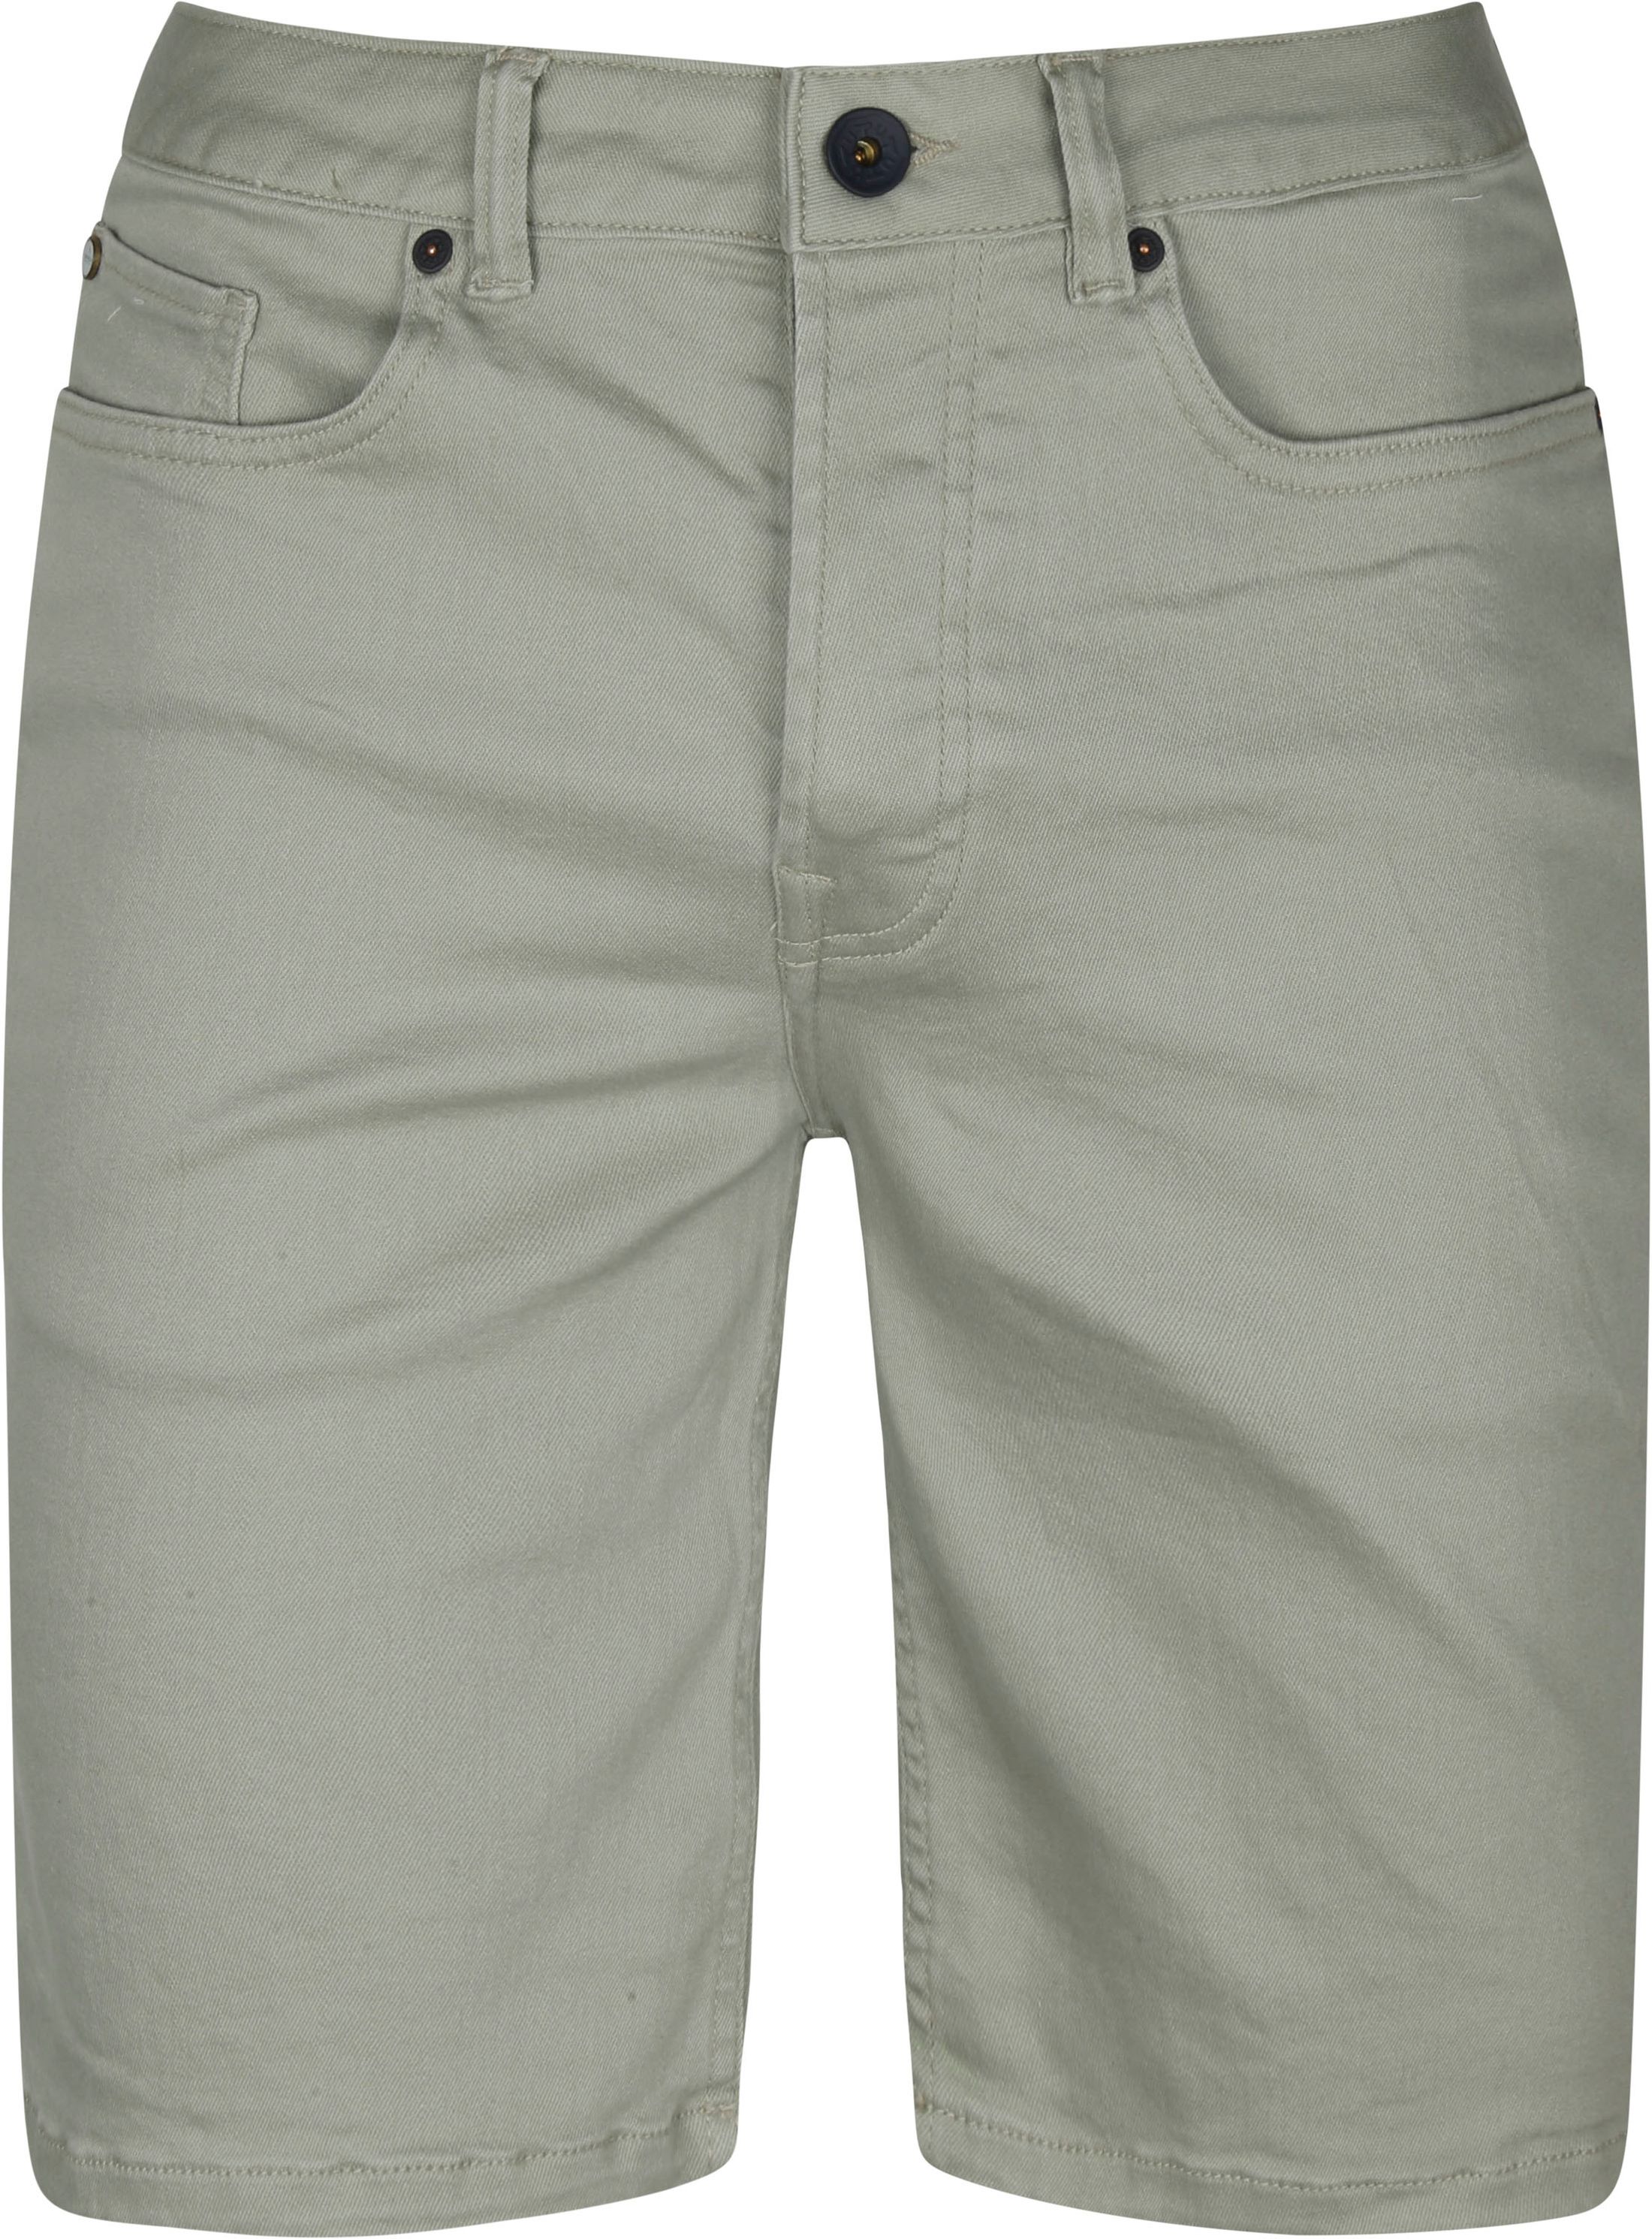 Dstrezzed Colored Denim Shorts Green size 31